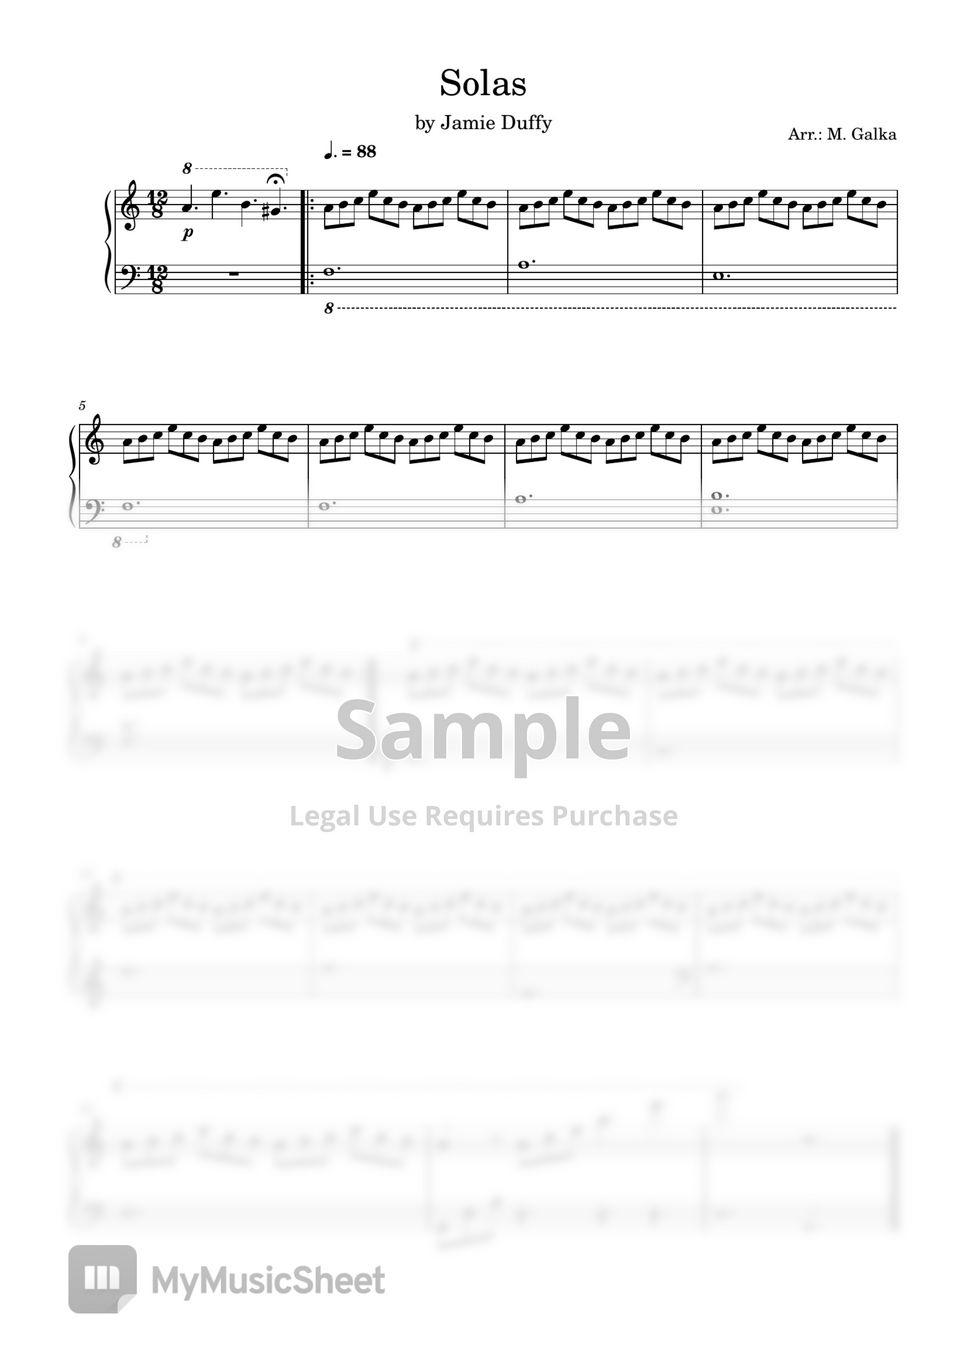 Jamie Duffy - Solas (Piano Easy) by M. Galka